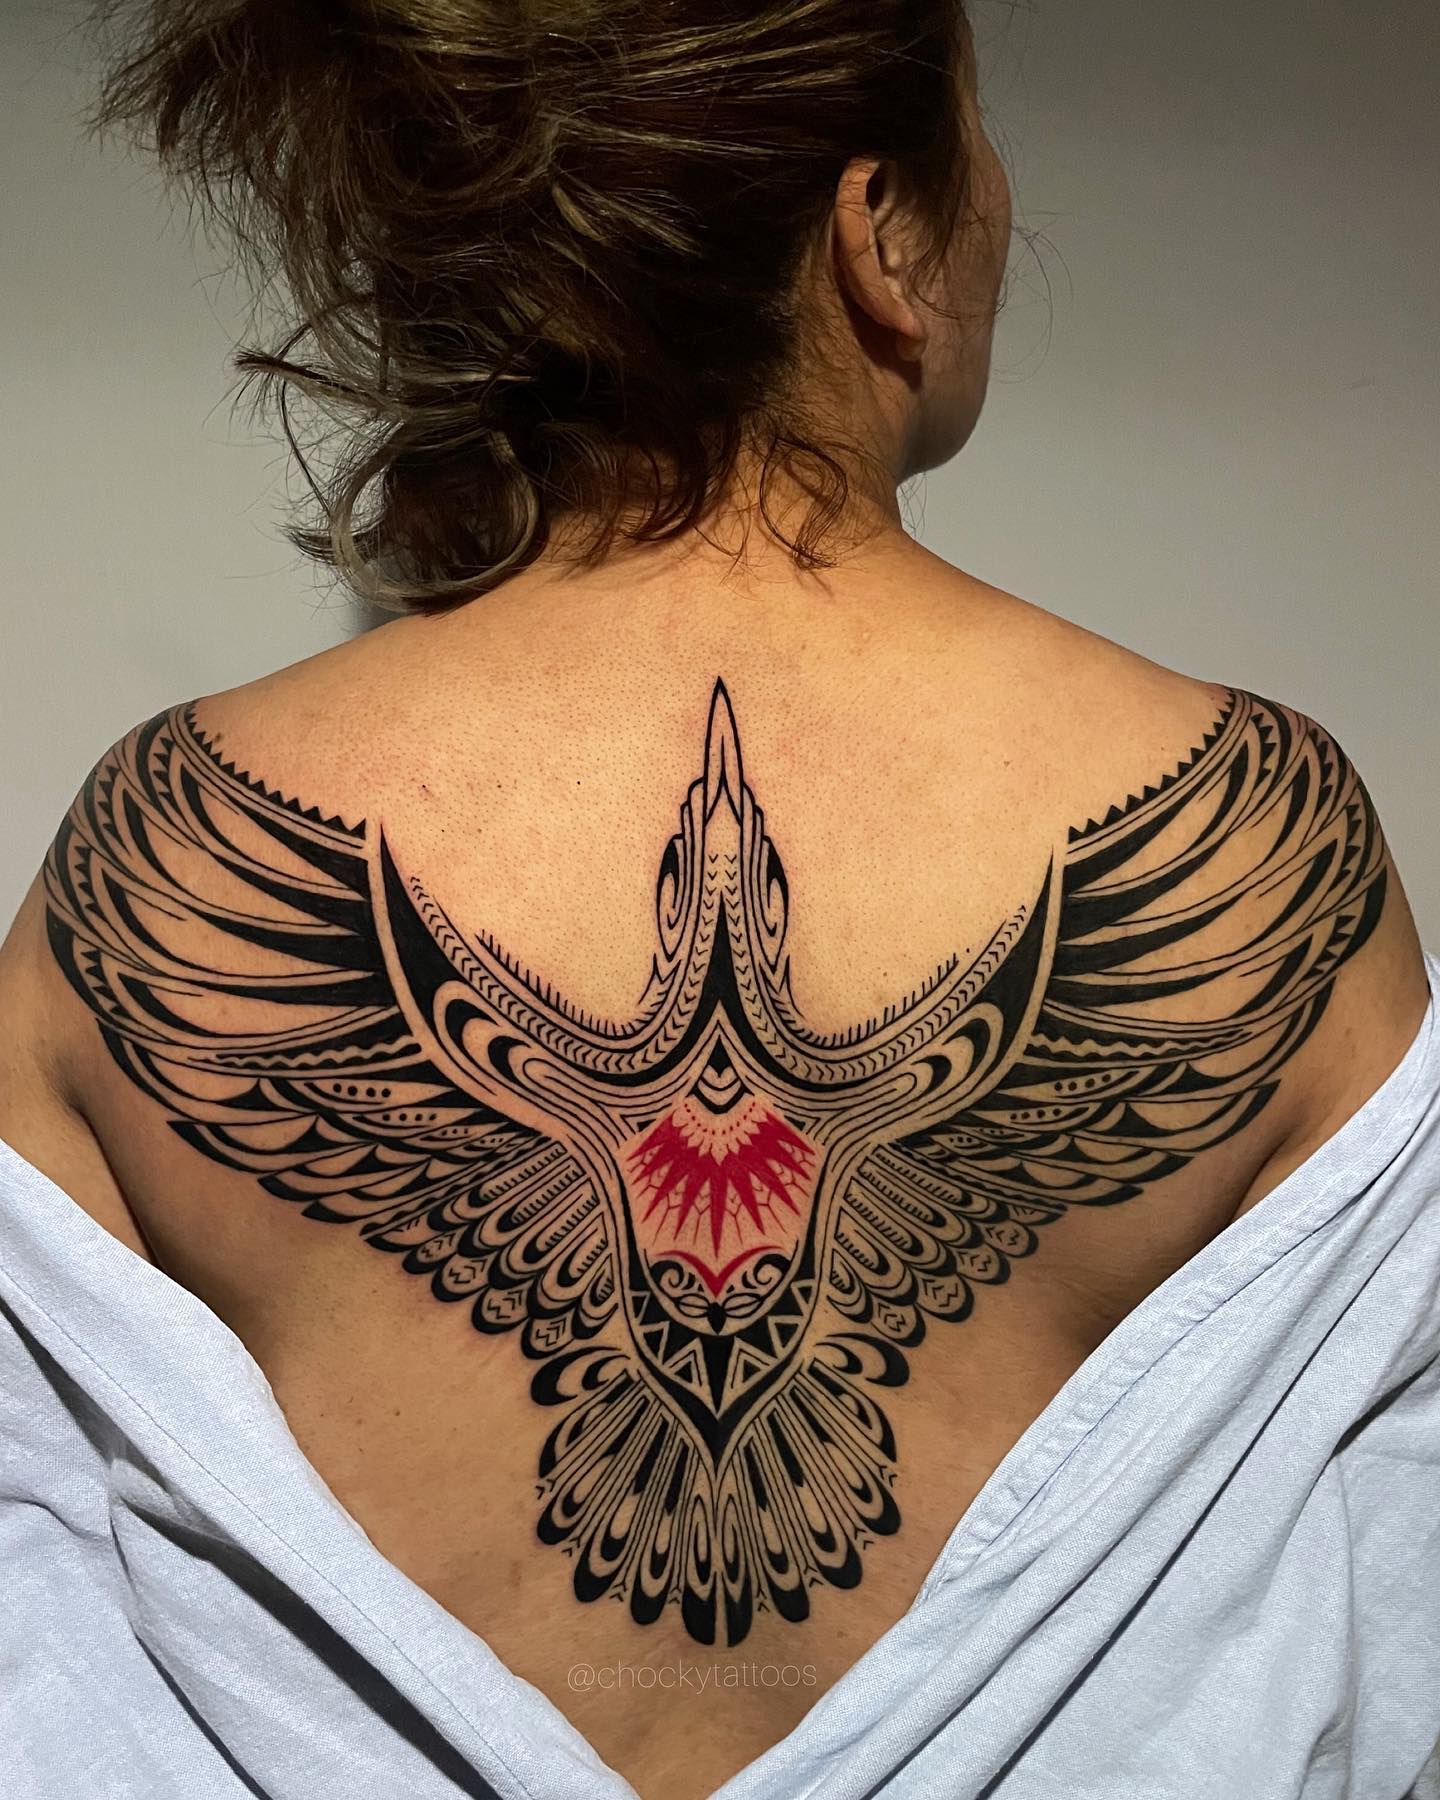 Tatuaje grande de un águila en la espalda.